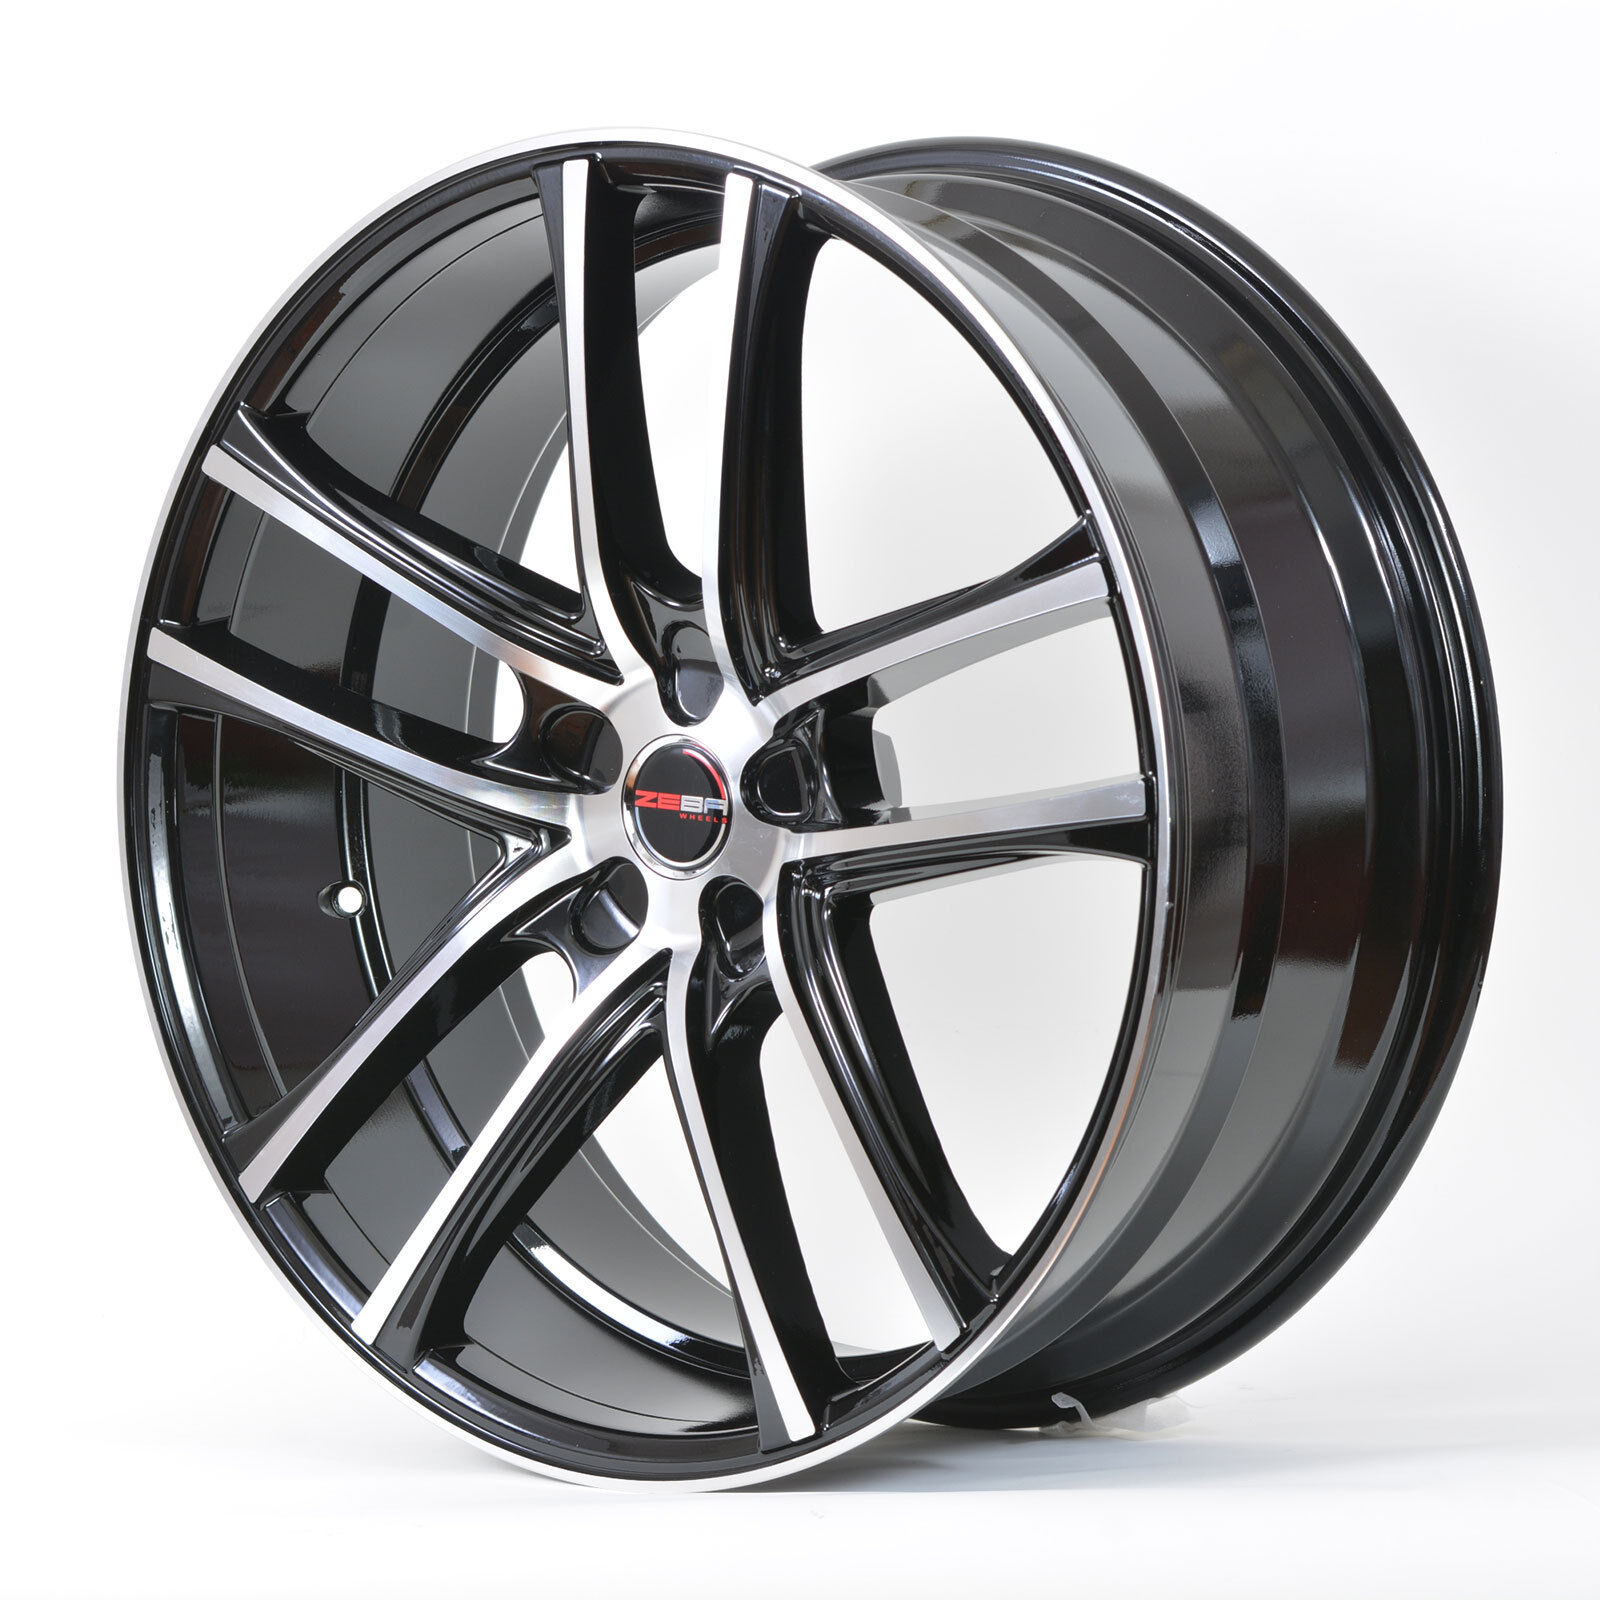 4 GWG Wheels 18 inch Black Machined ZERO Rims fits 5x108 FORD FOCUS ST 2013-2016